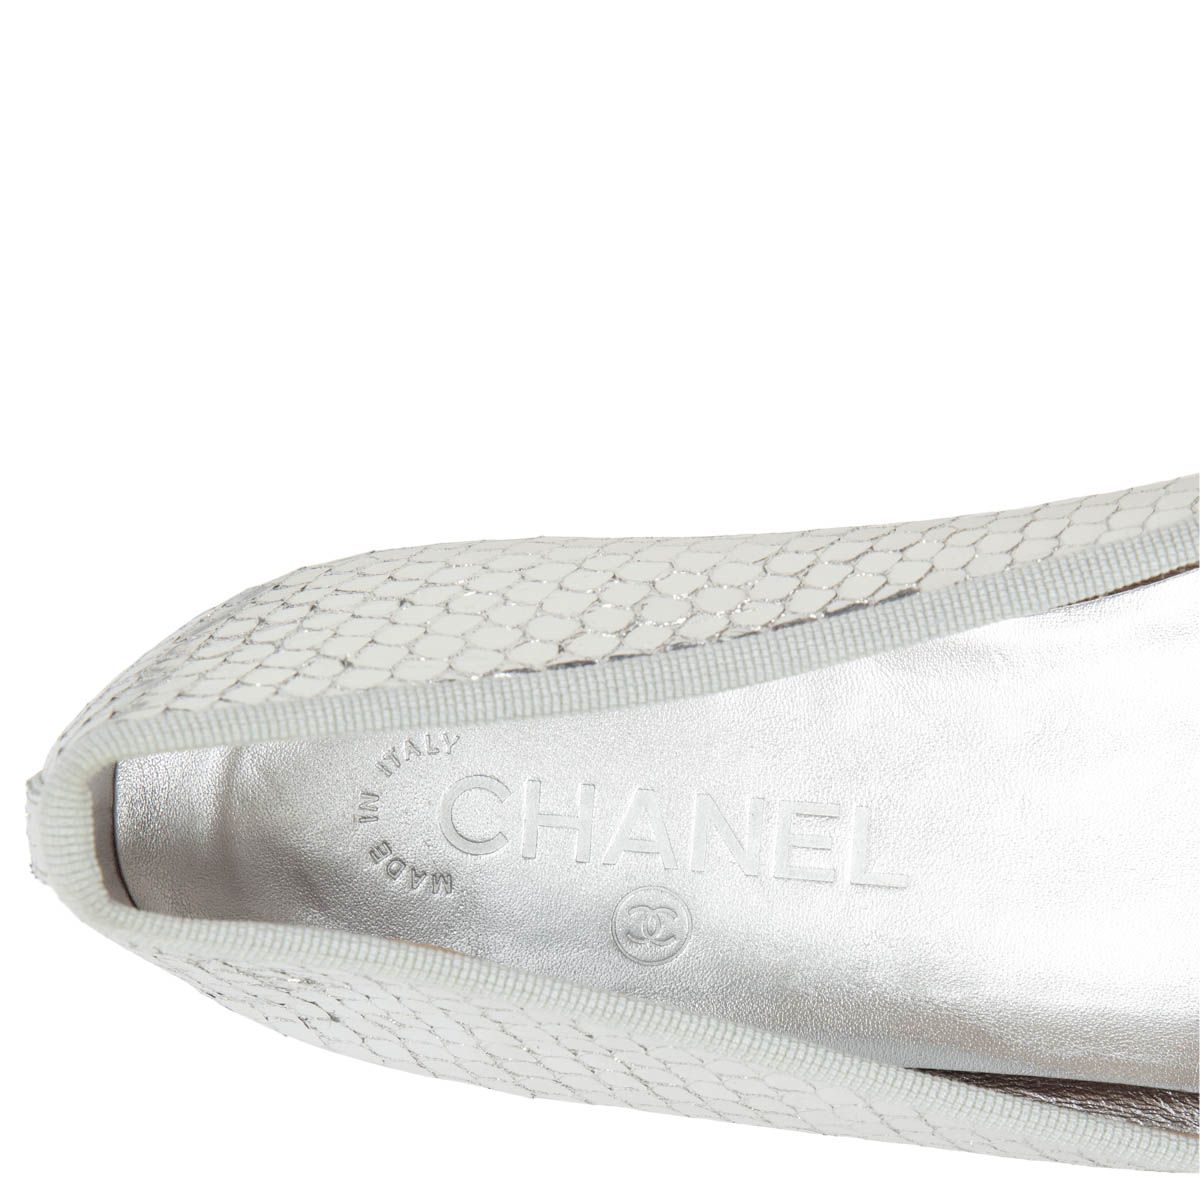 Chanel Classic Snakeskin Python Ballet Flats Metallic Silver